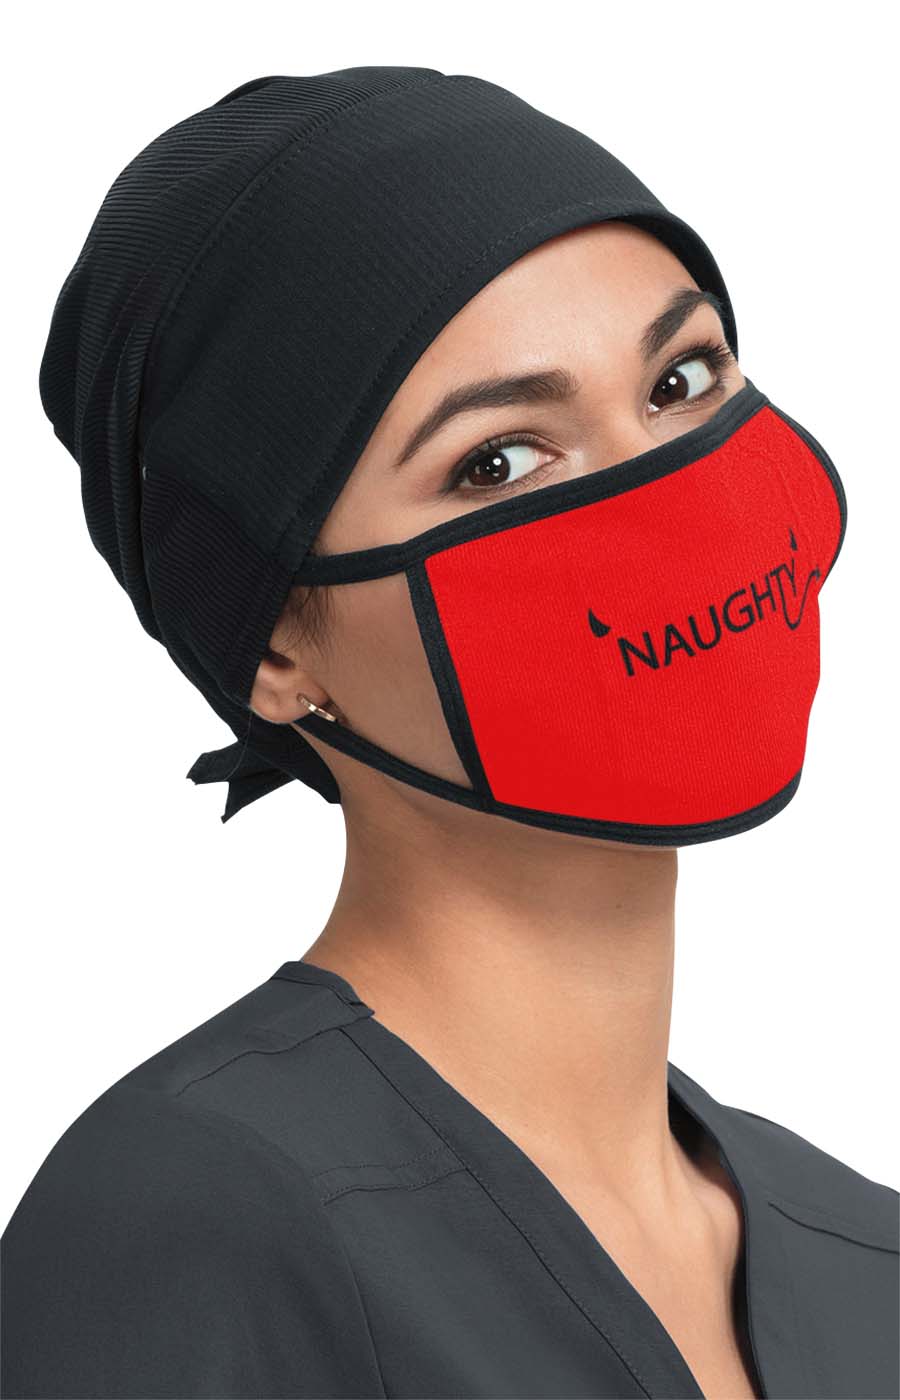 Reversible Fashion Mask Naughty and Nice